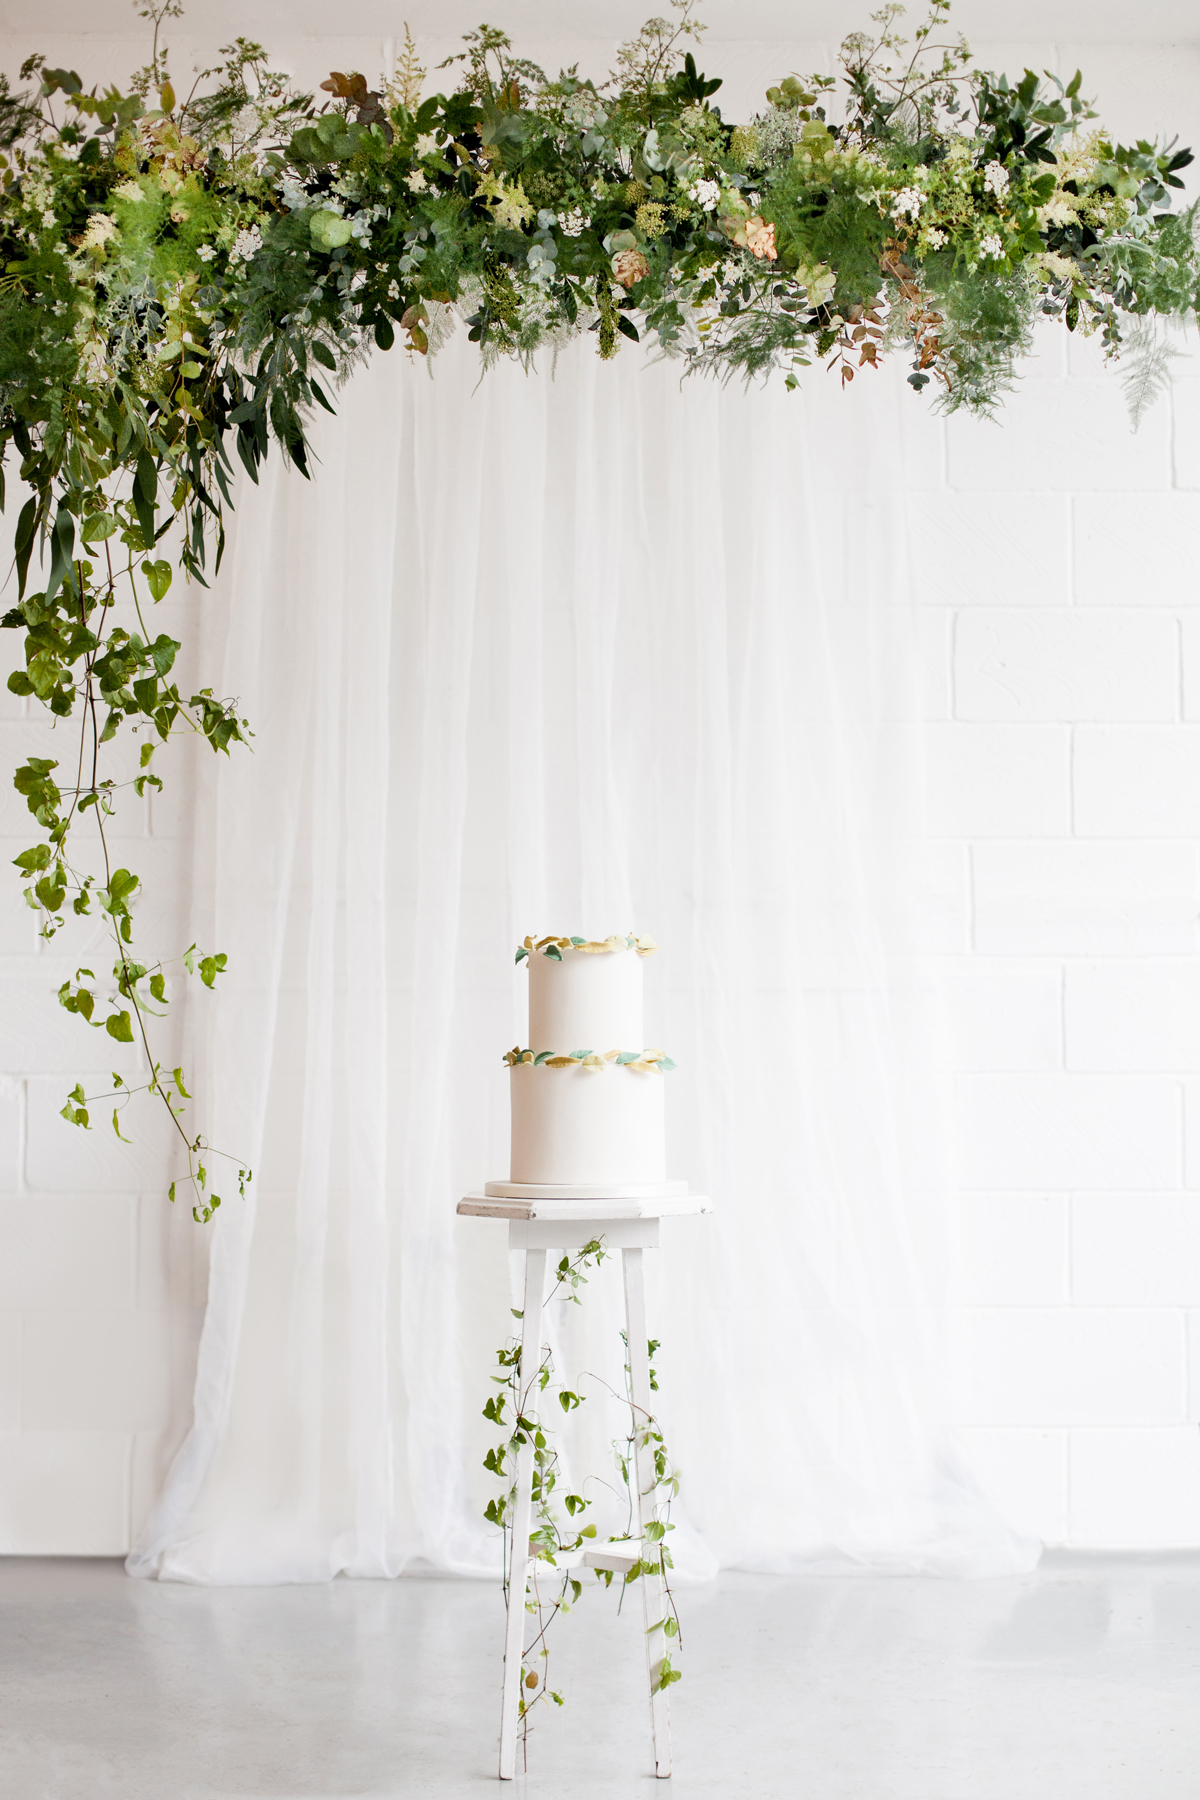 Wedding Cake with Greenery Display